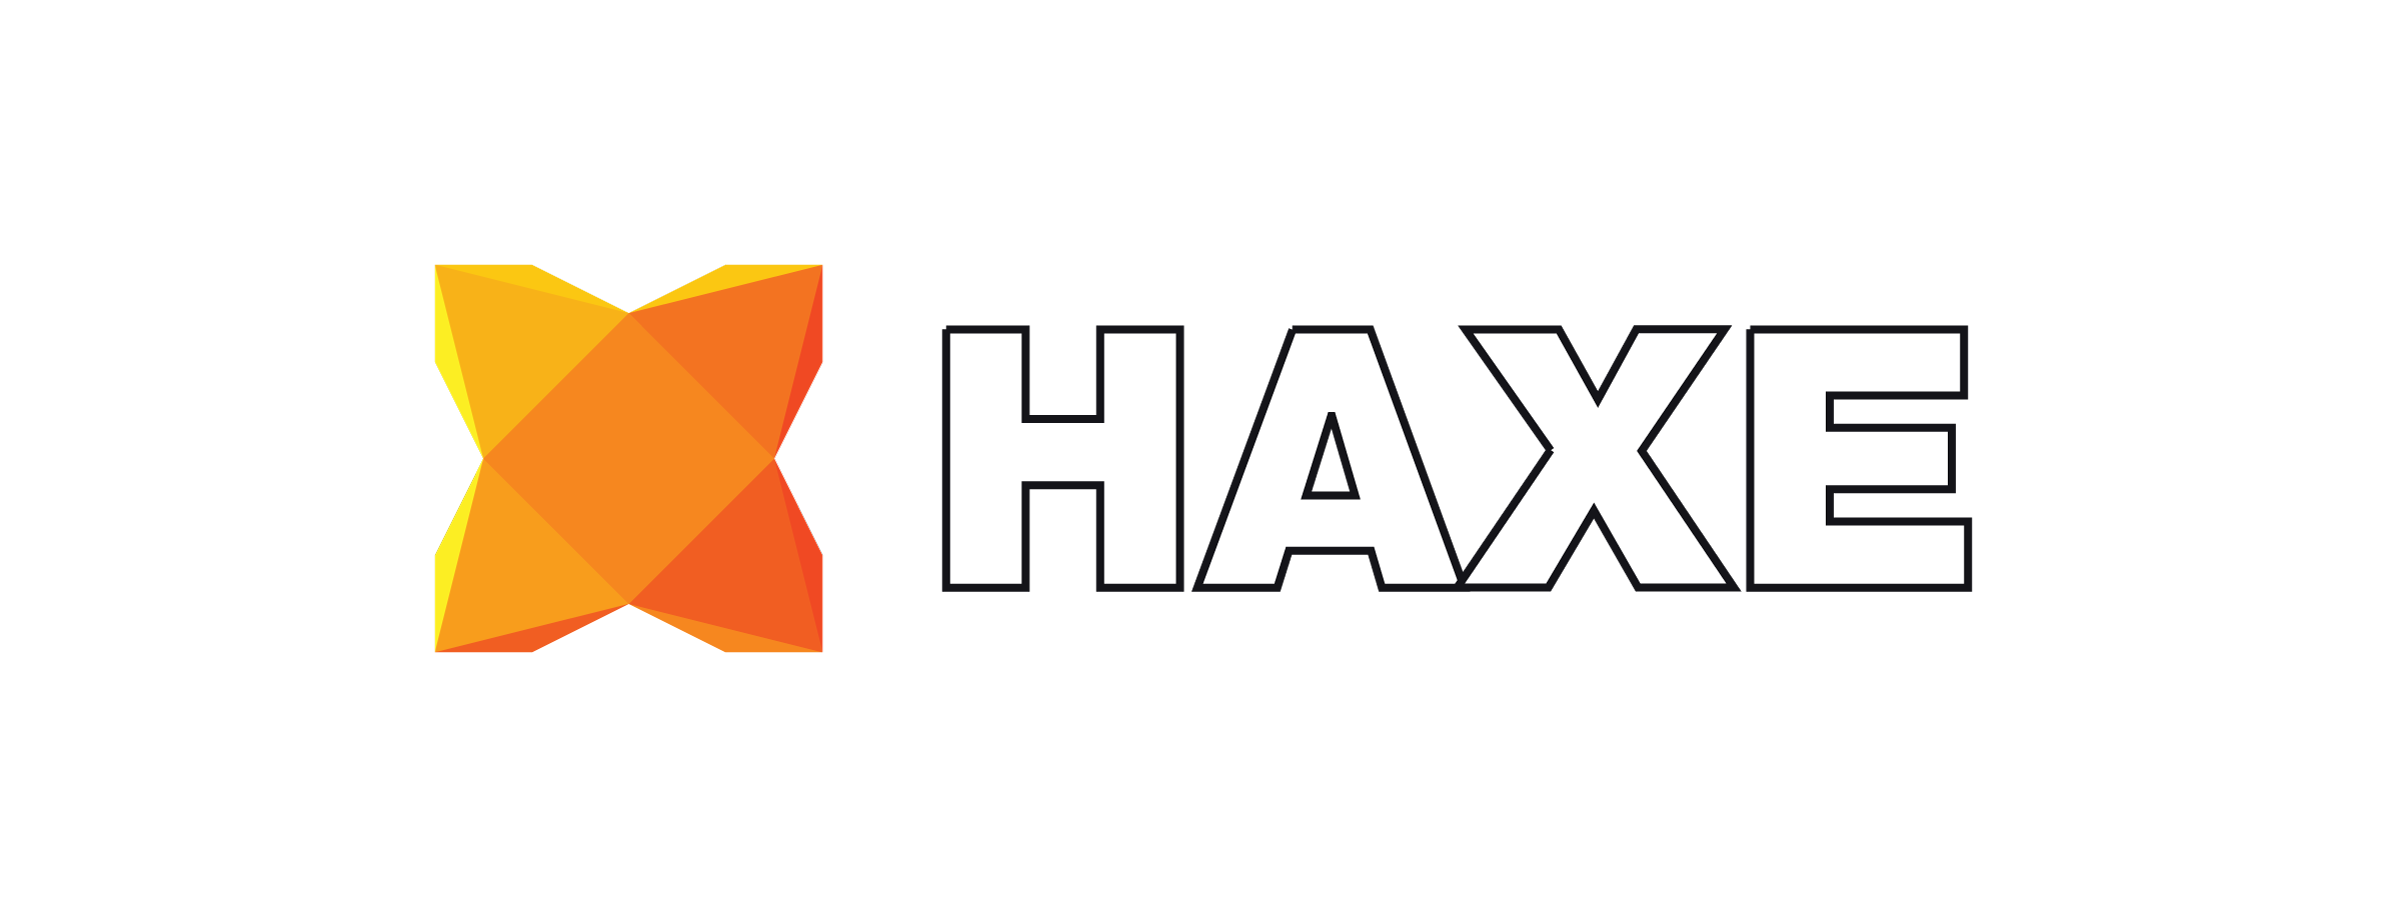 Haxe and JavaScript